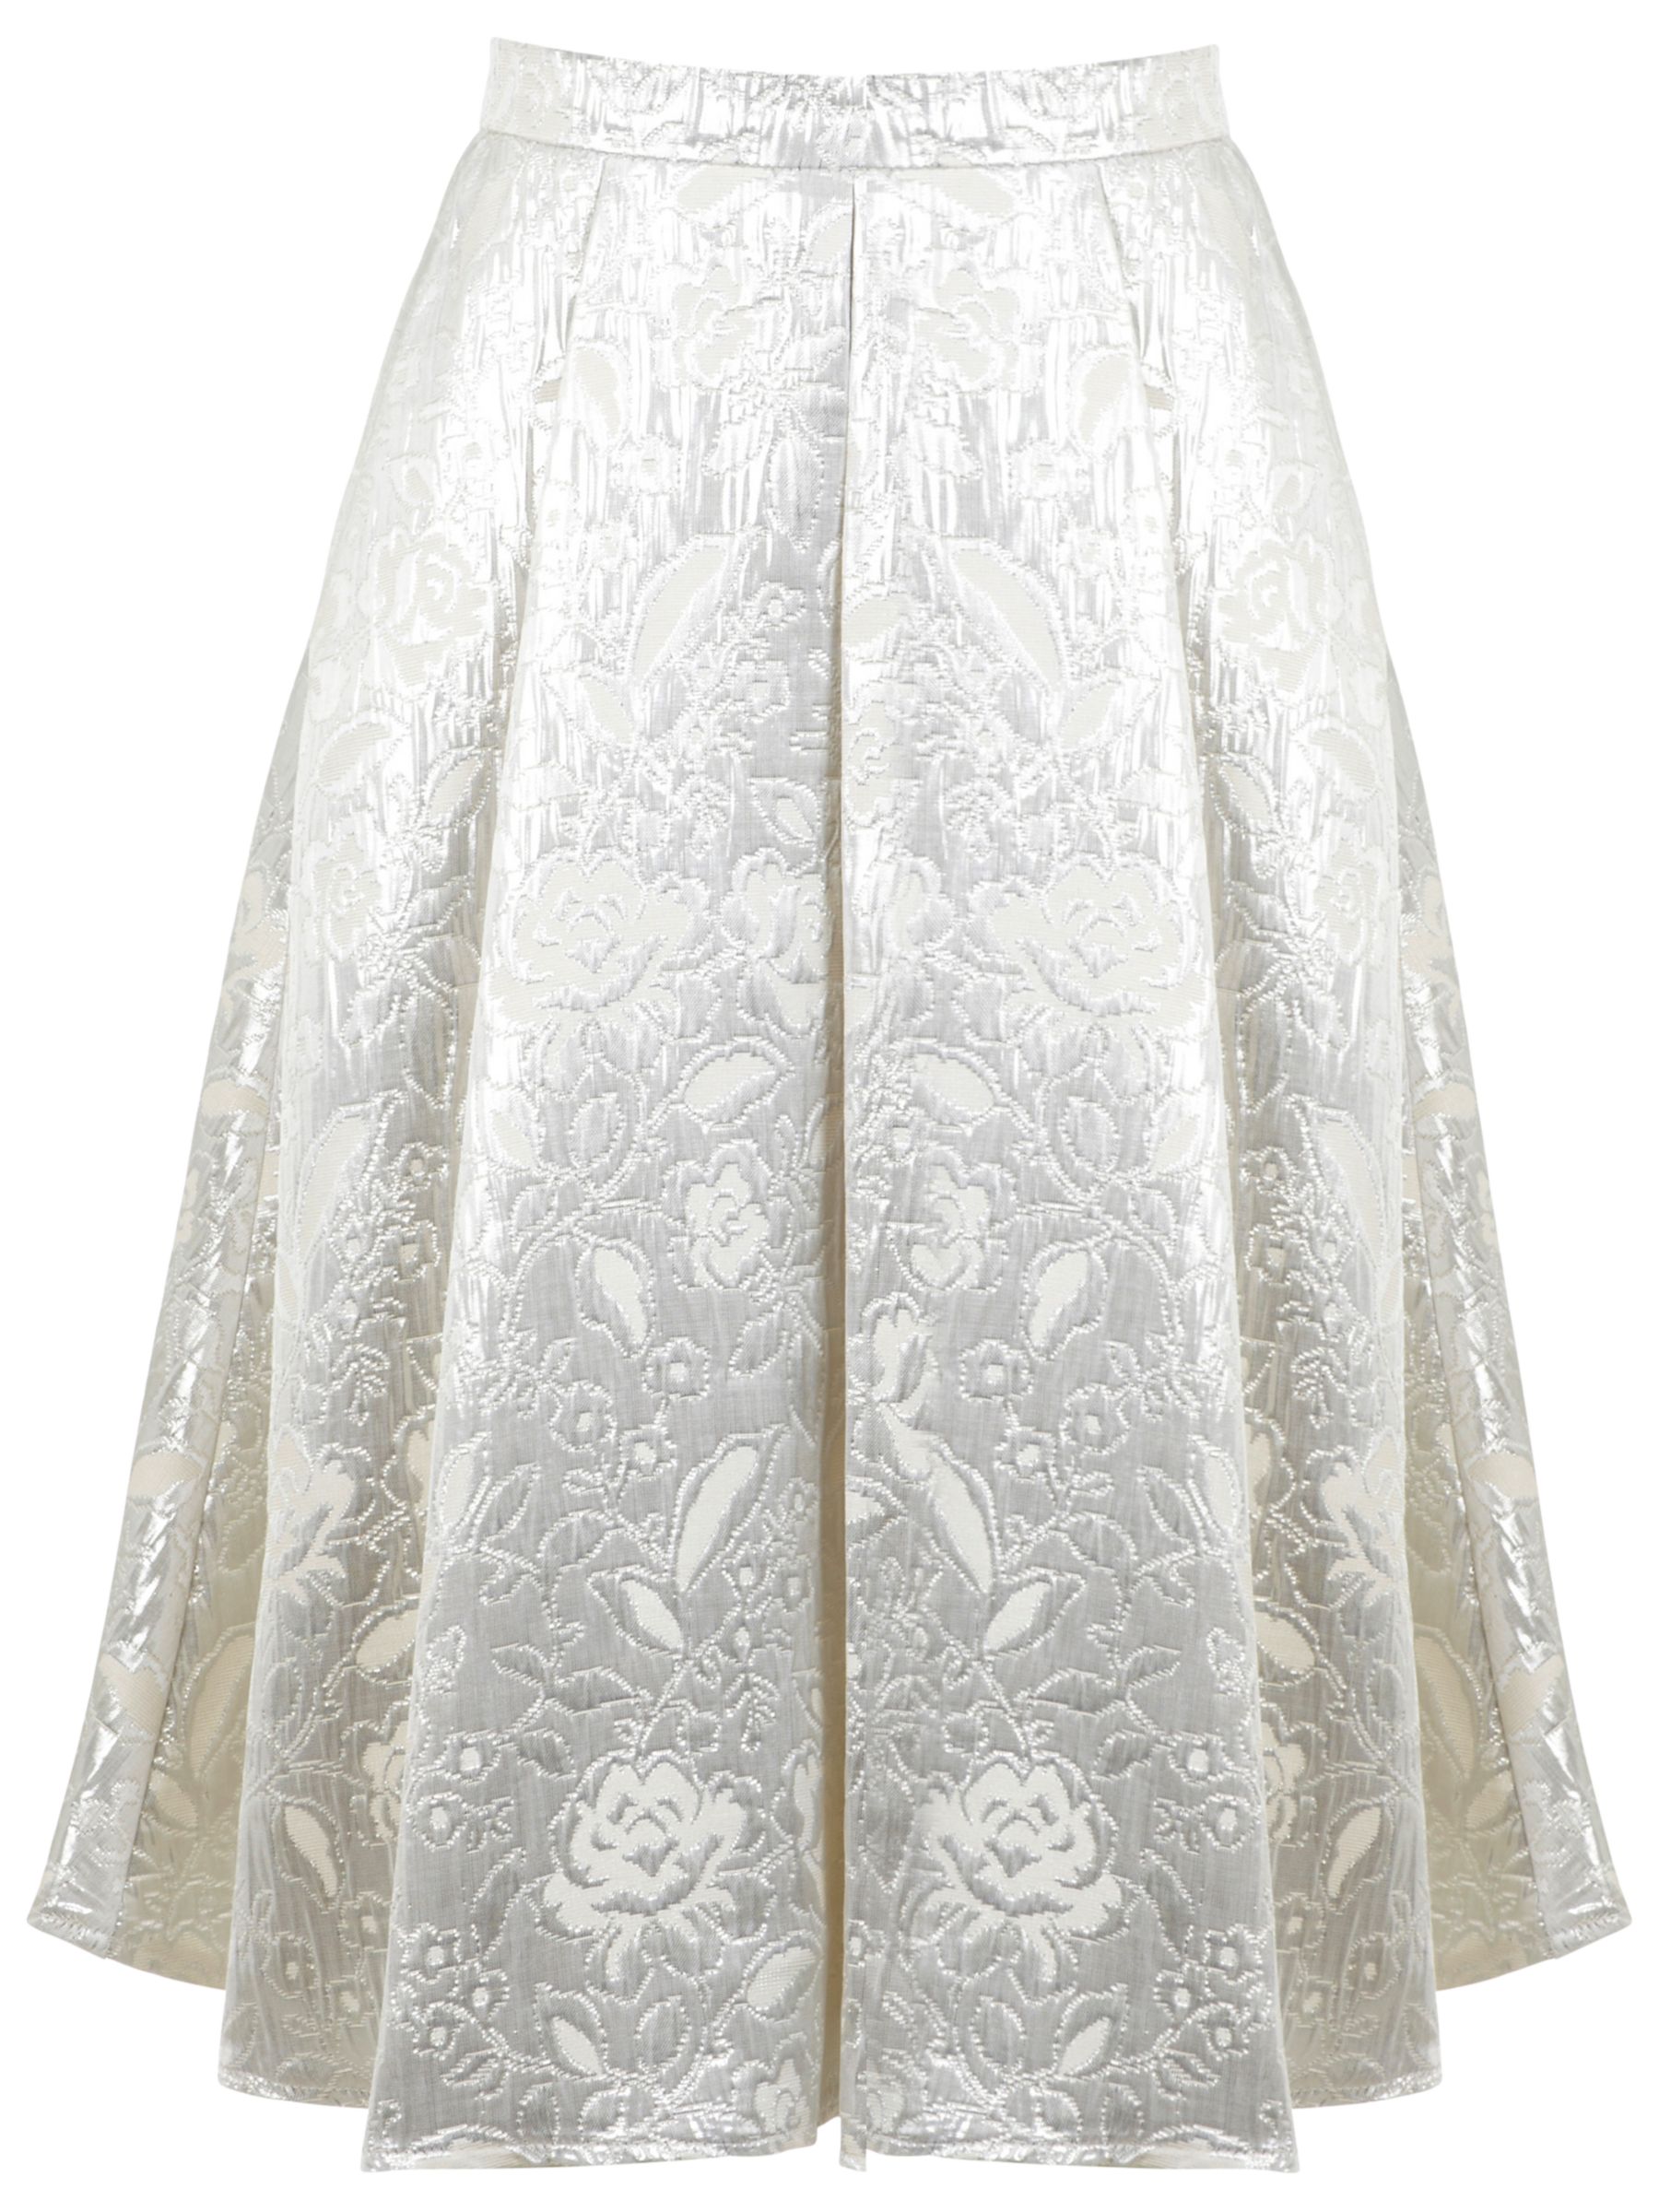 Miss Selfridge Jacquard Midi Skirt, Cream at John Lewis & Partners